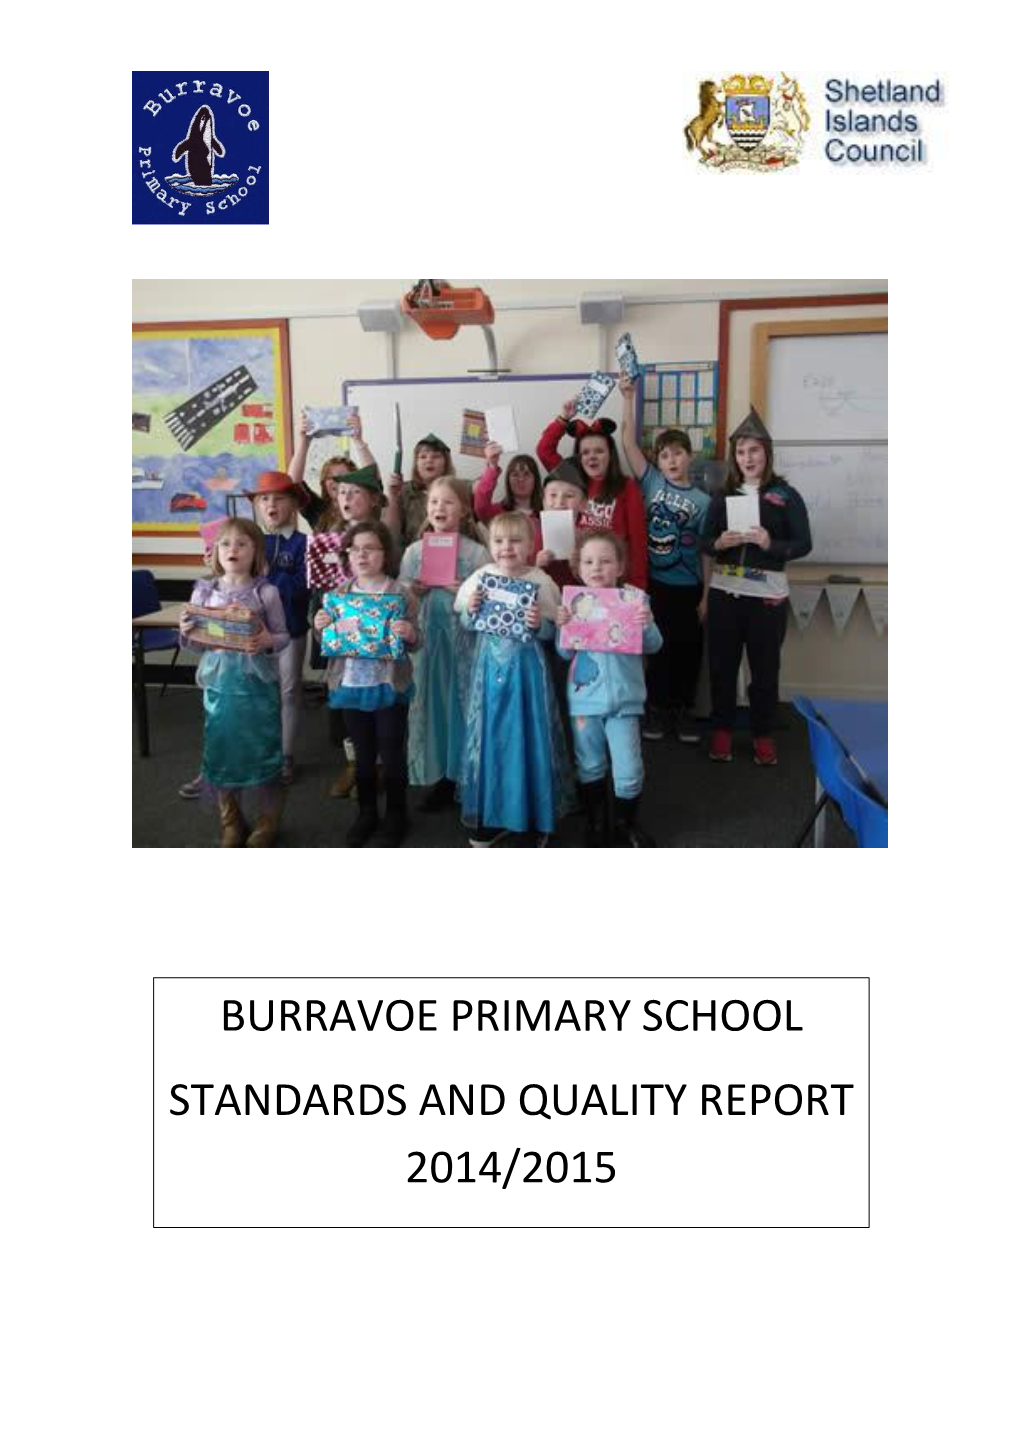 Burravoe Primary School Standards and Quality